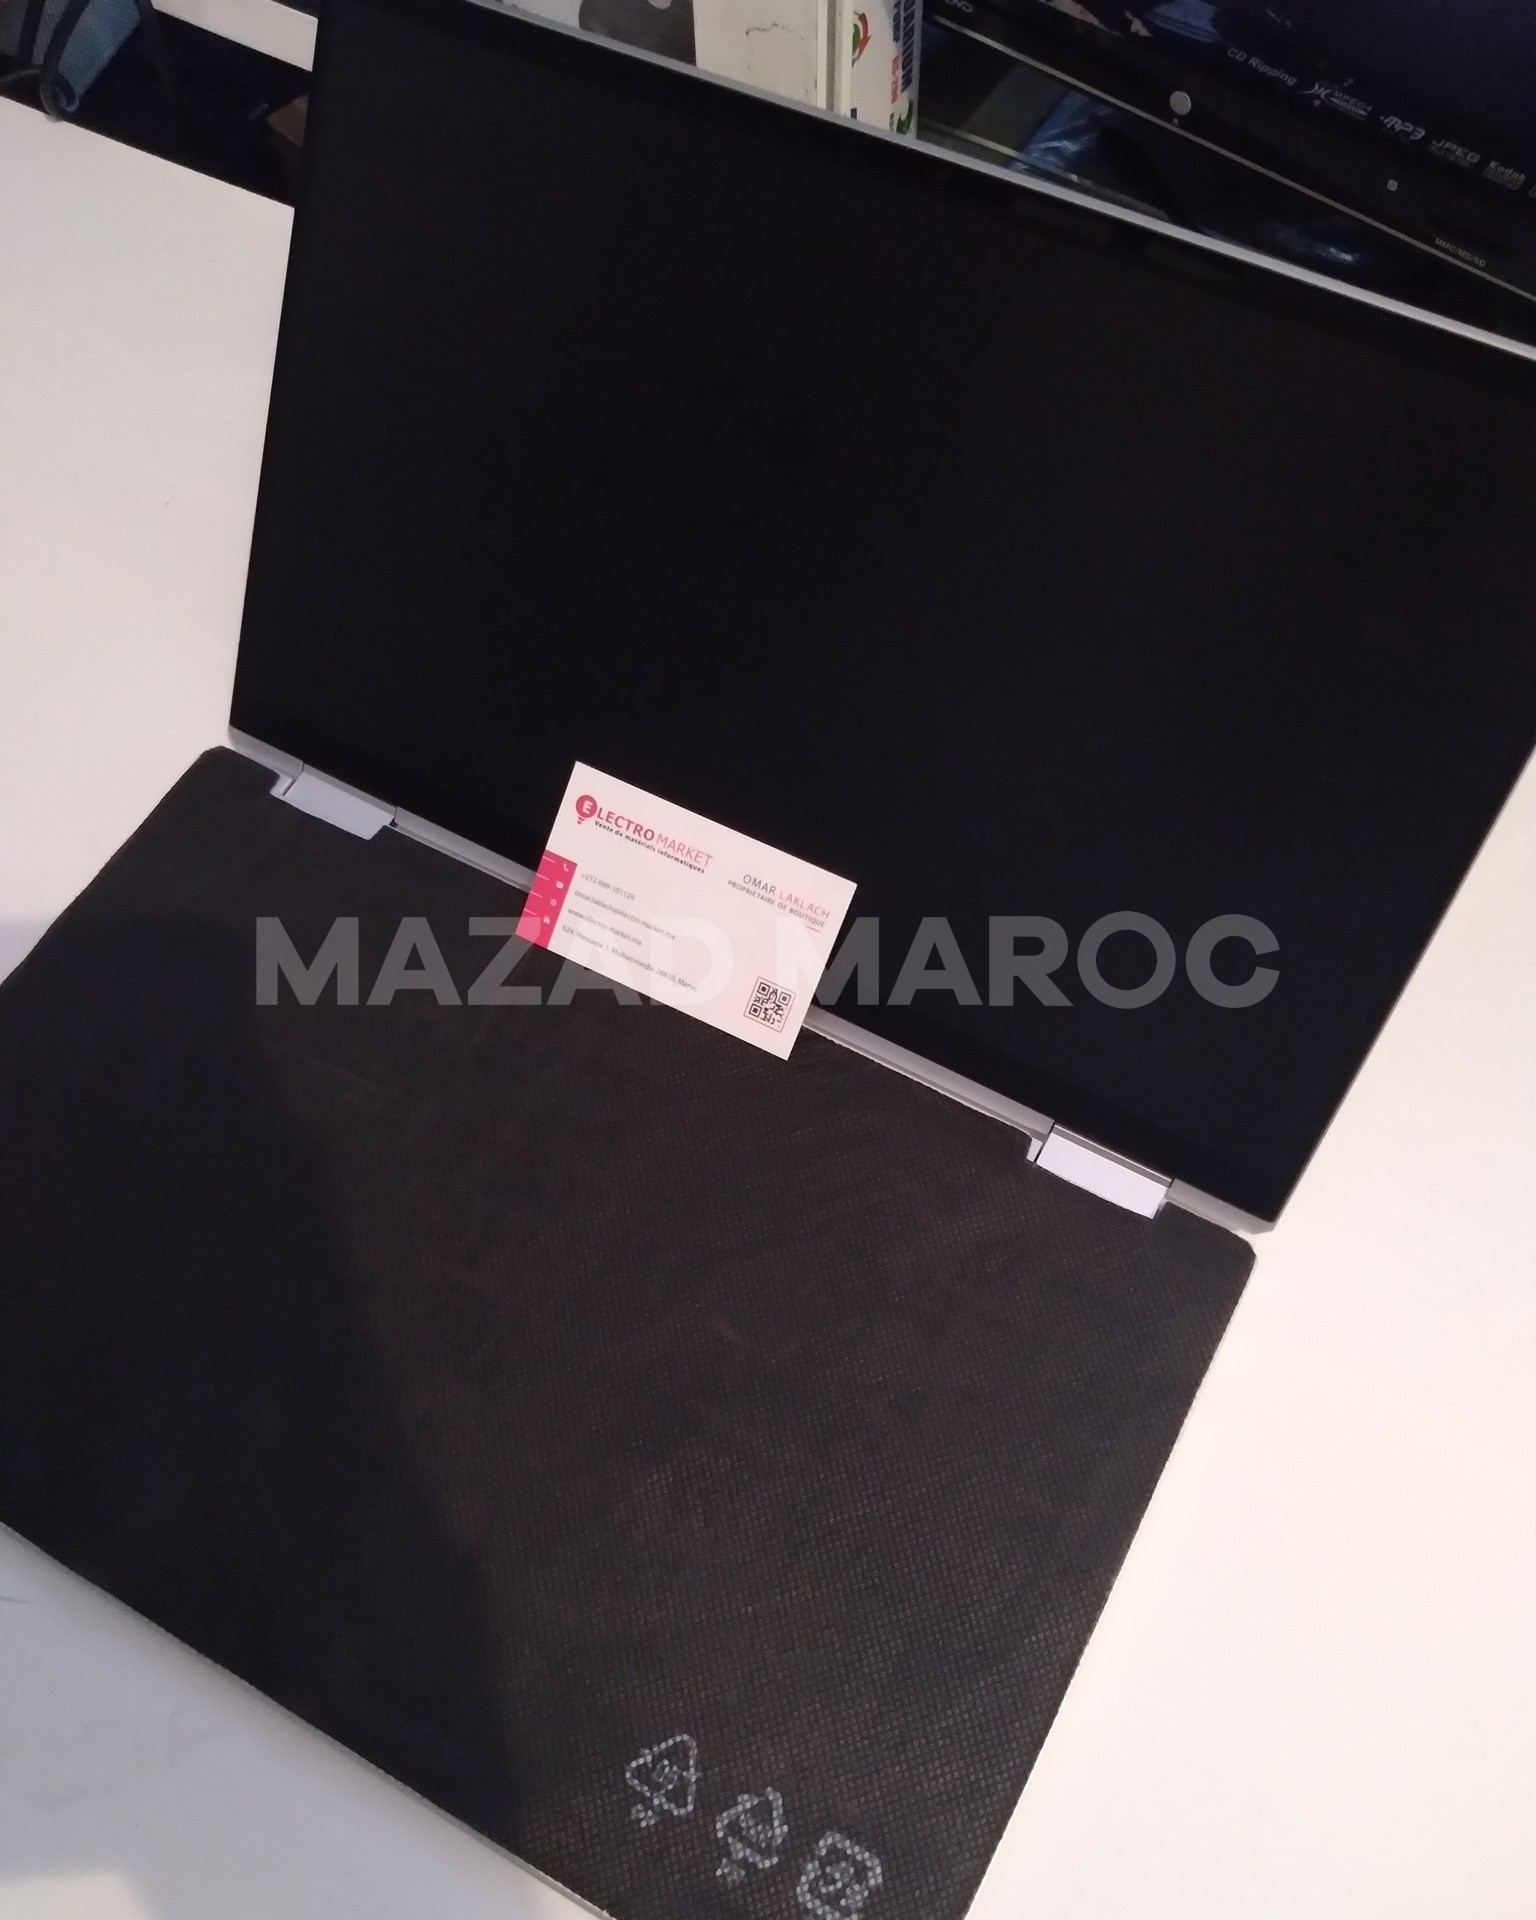 HP EliteBook x360 1040 G7 Intel® Core i5-10210U